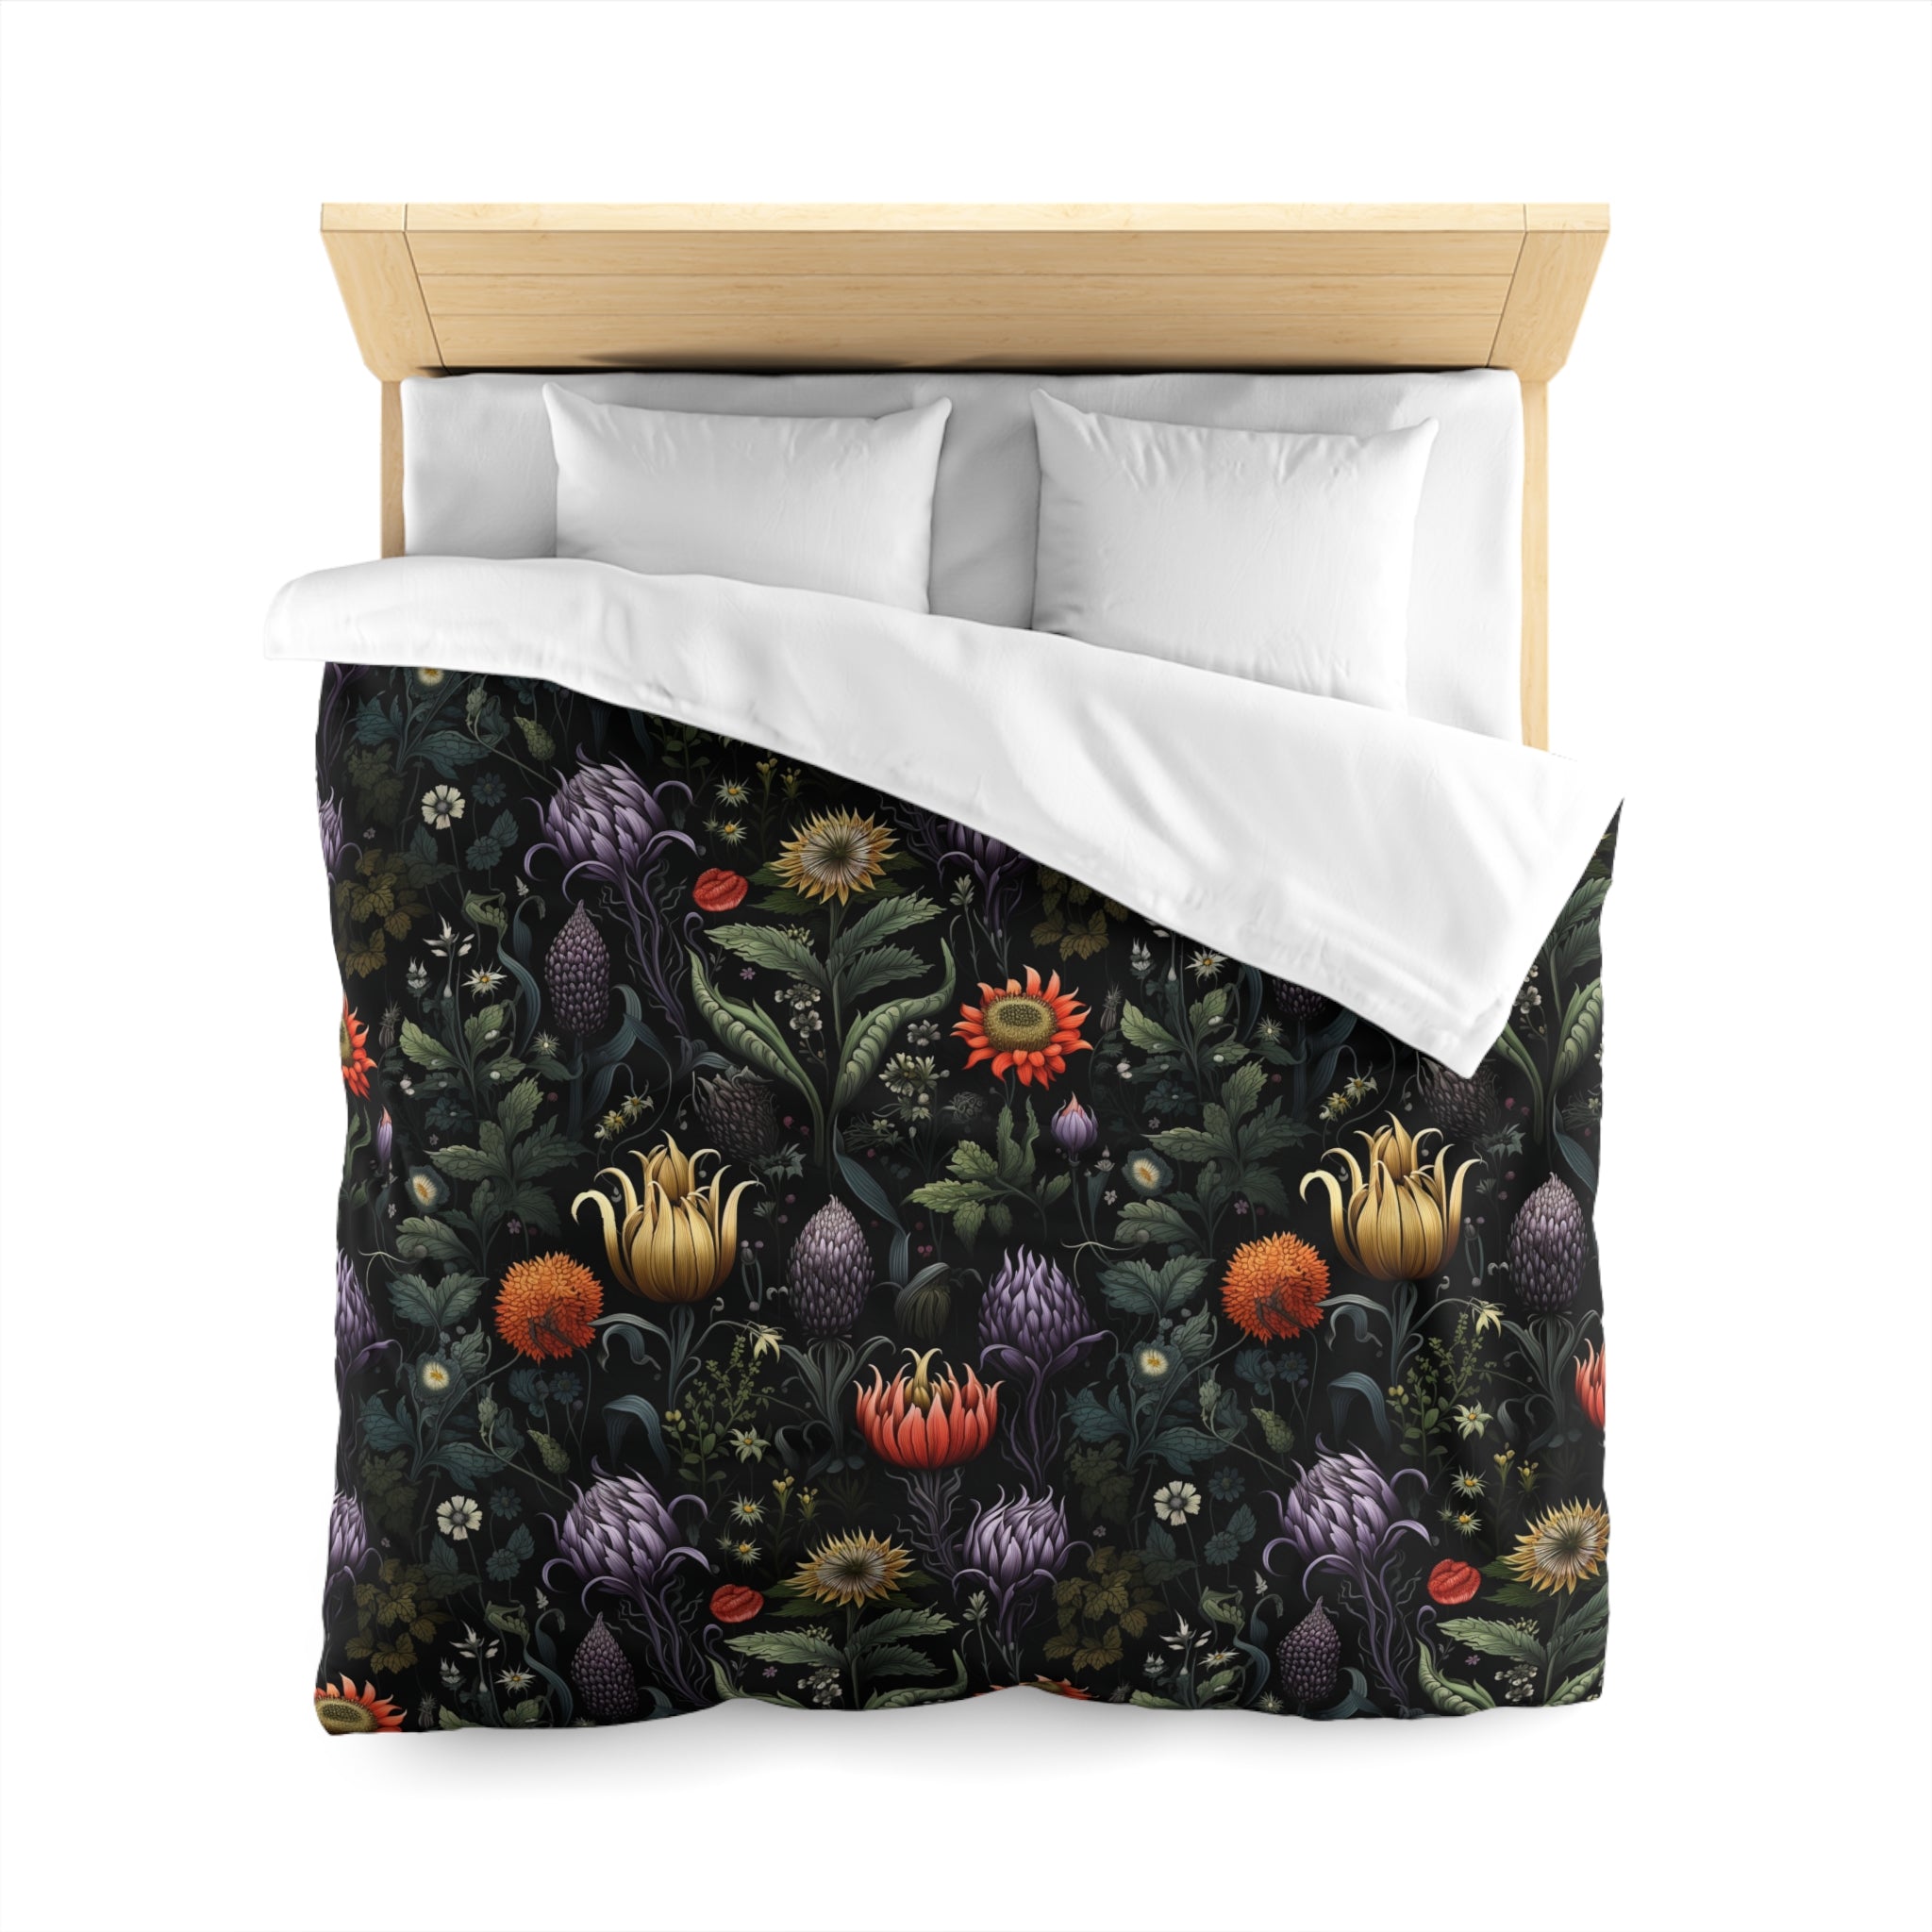 Enchanted Autumn Floral Microfiber Duvet Cover Set with Pillow Shams